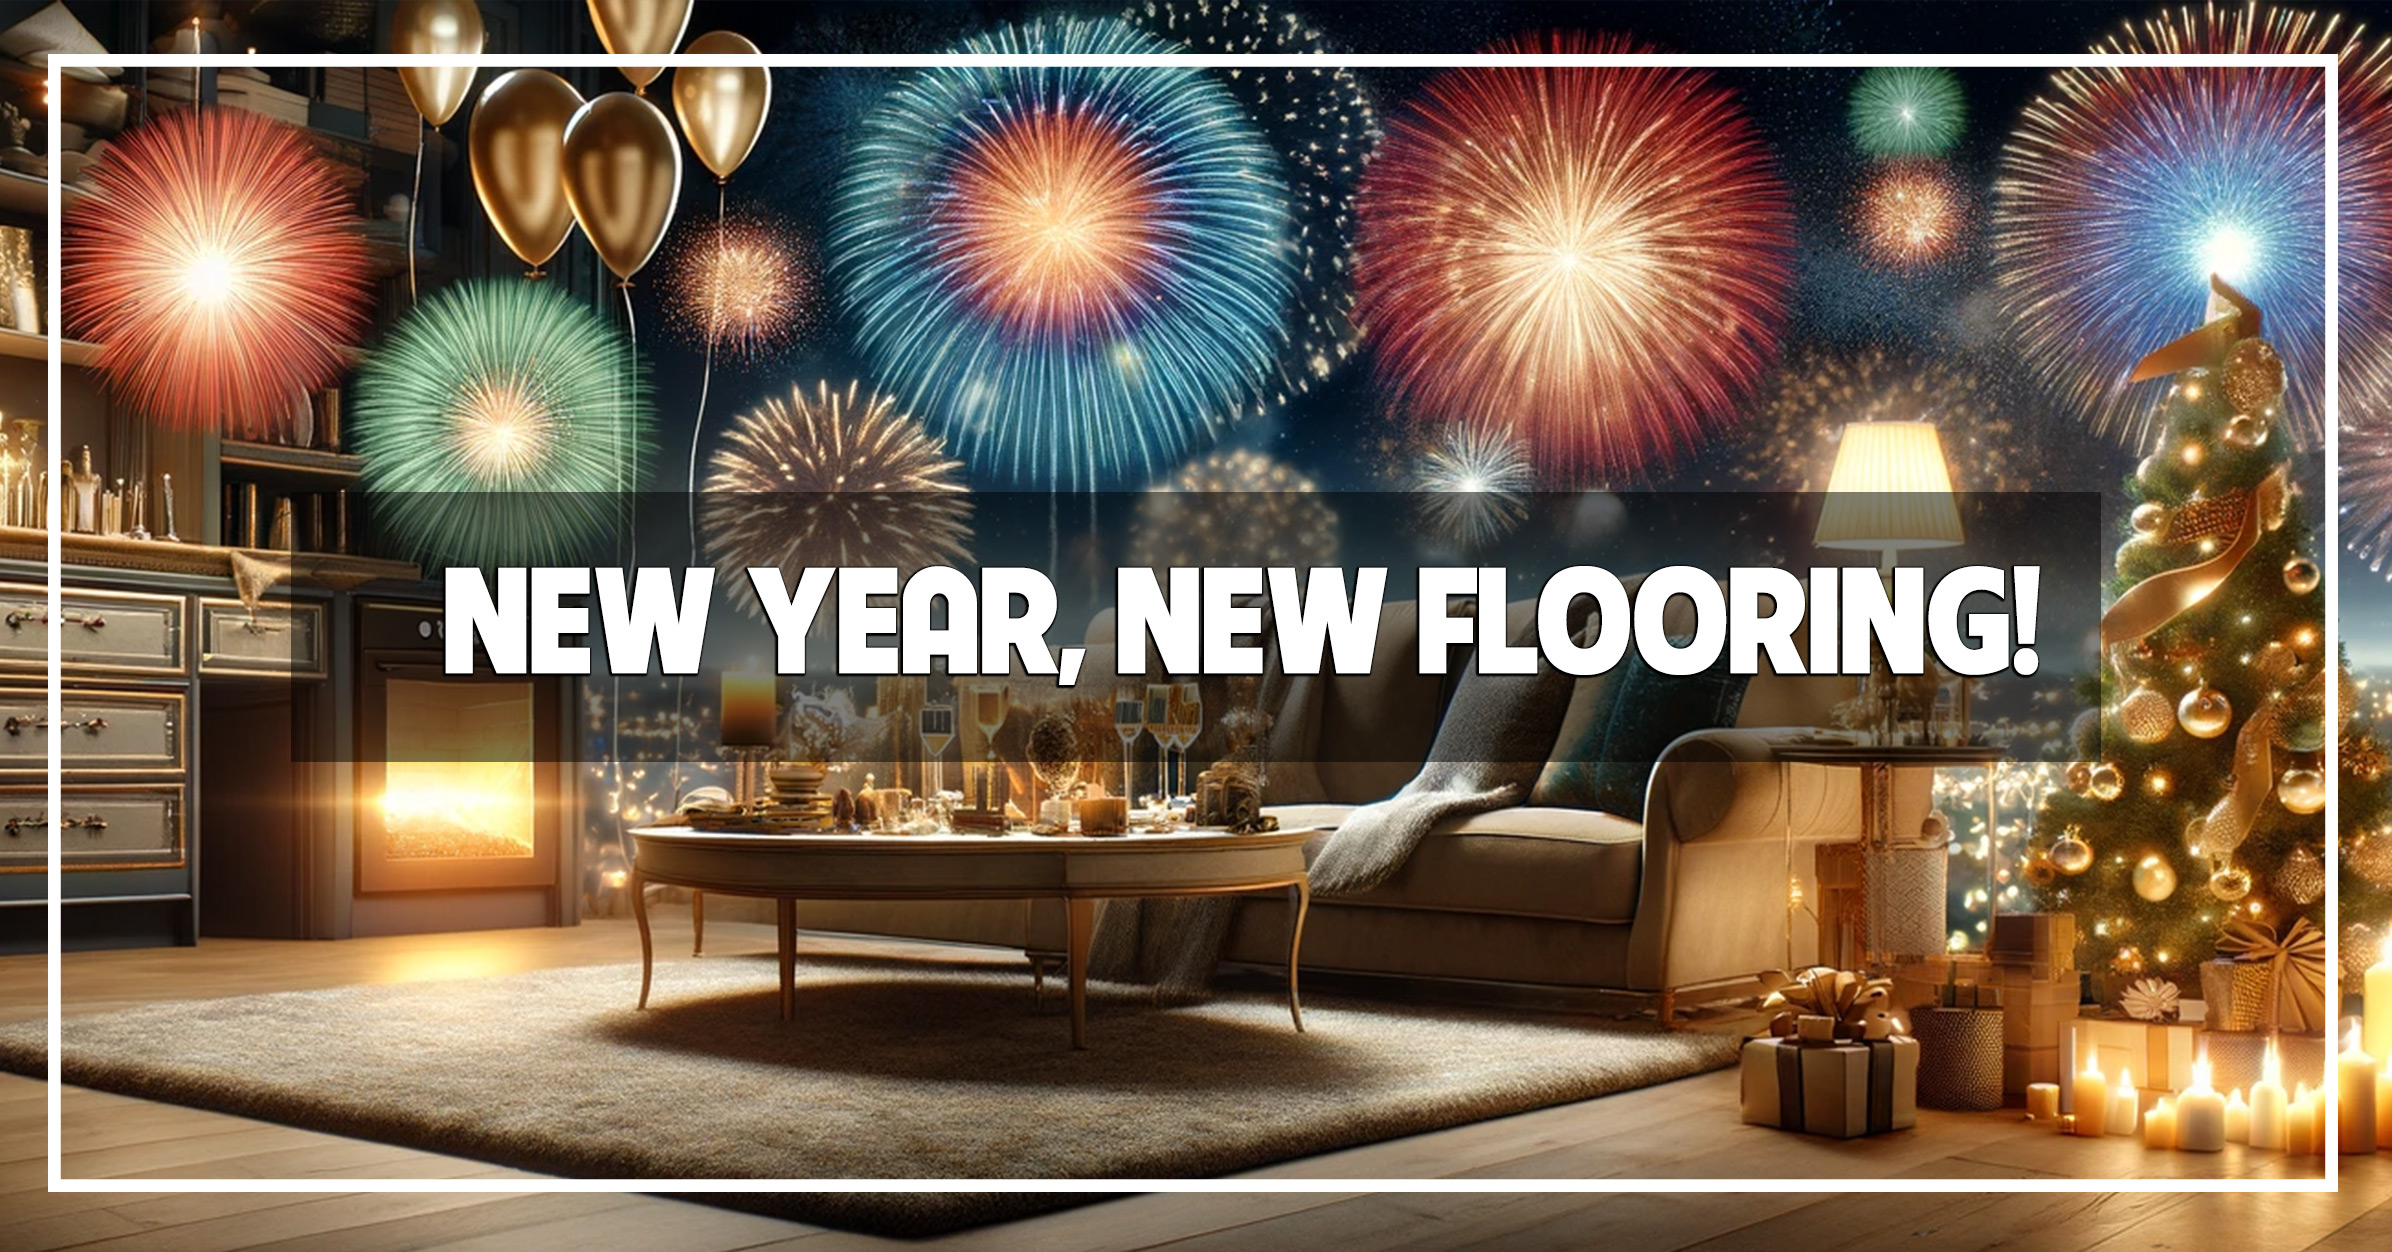 New Year - New Floor Repair LVT - 1877FloorGuy